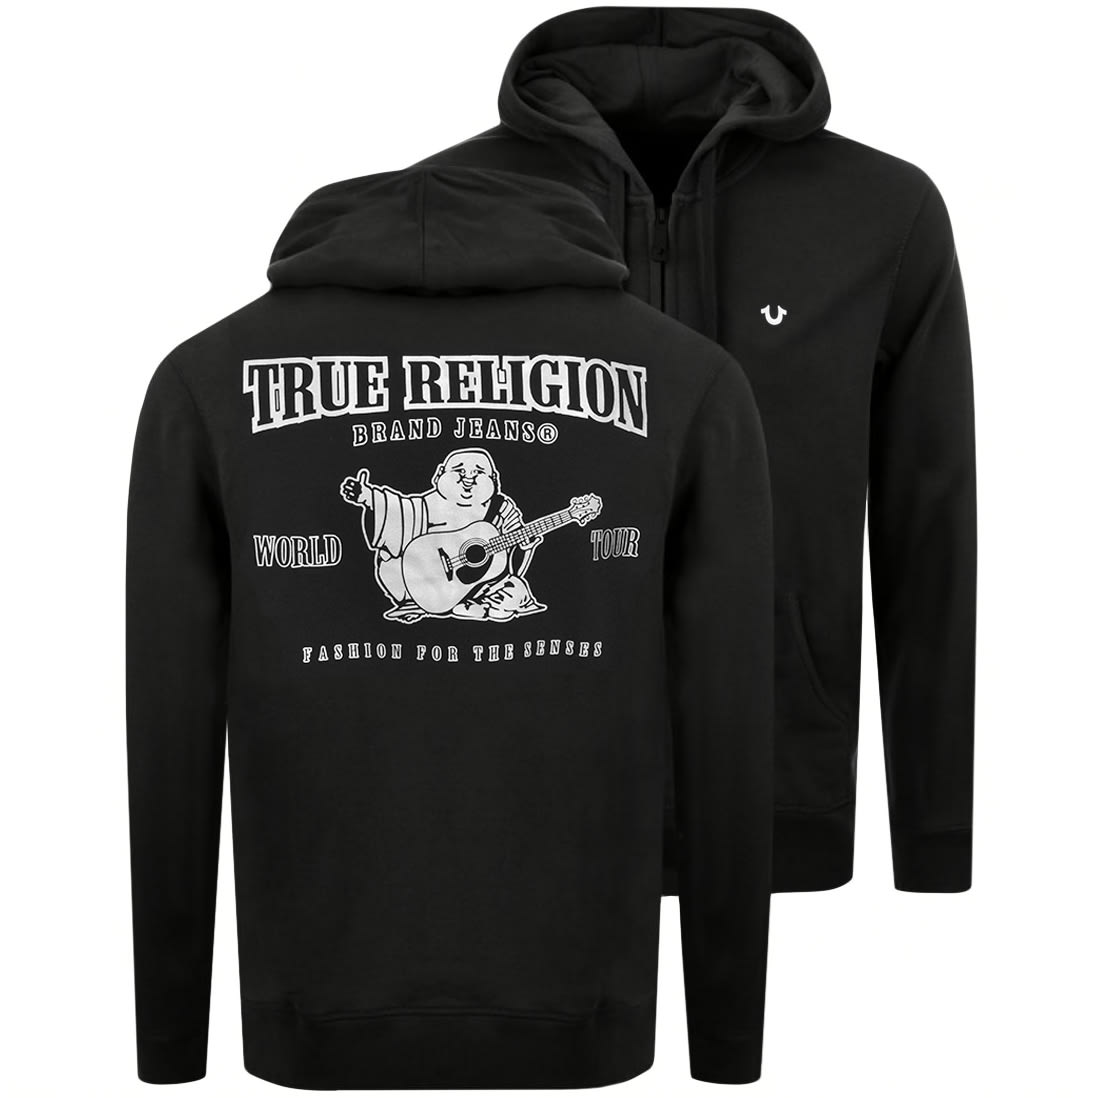 true religion hoodie black and white